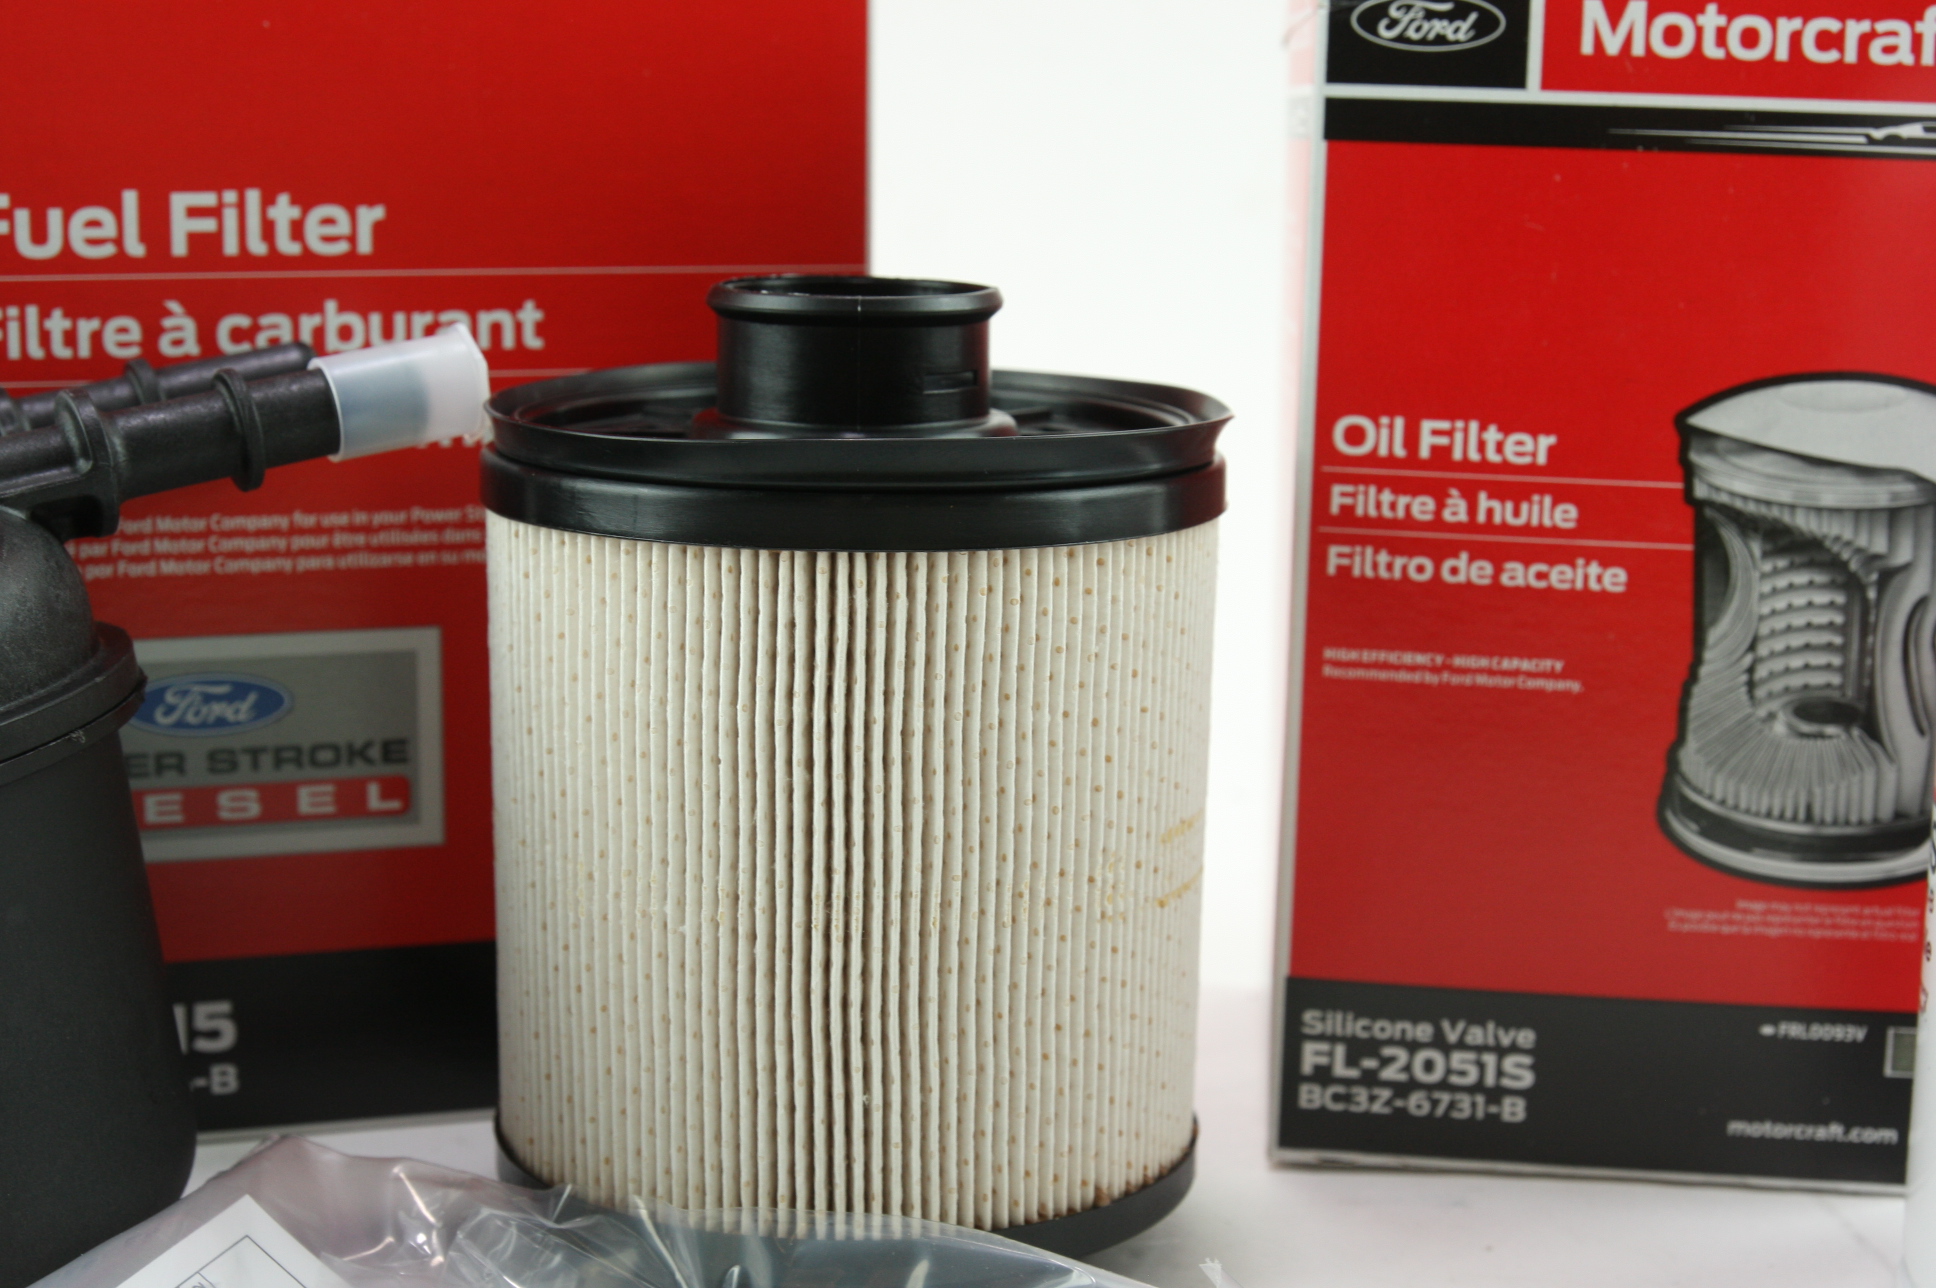 Diesel Fuel & Oil Filter Kit Motorcraft FD4615 FL2051S Genuine OEM Ford Filters - image 3